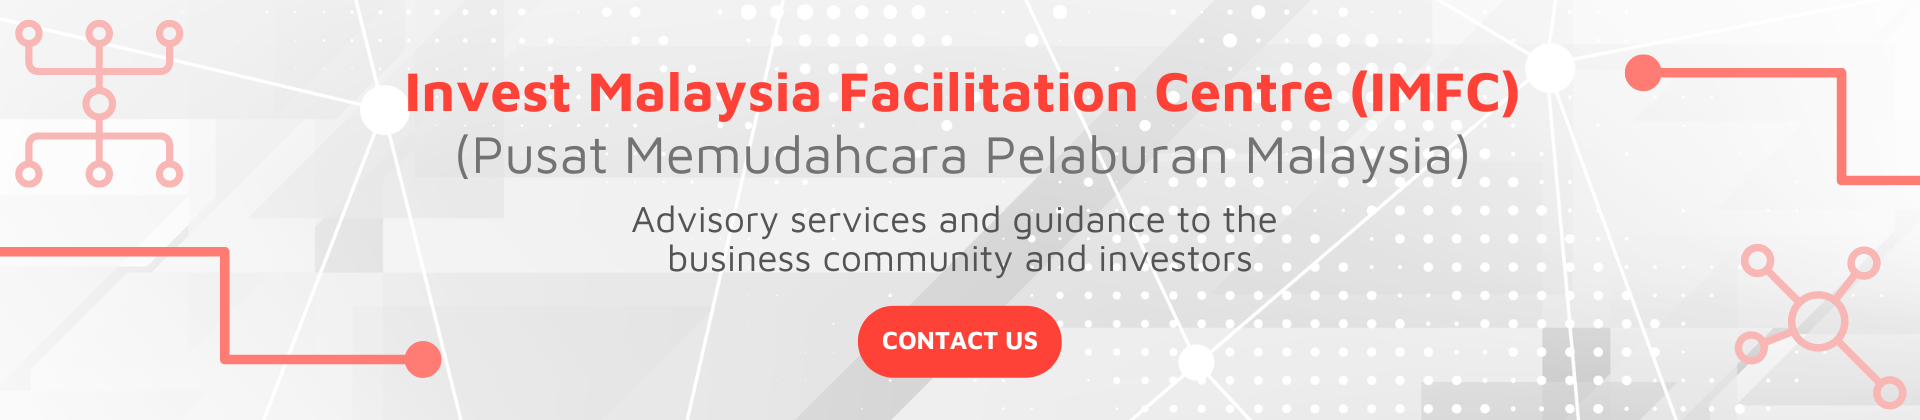 Invest Malaysia Facilitation Centre